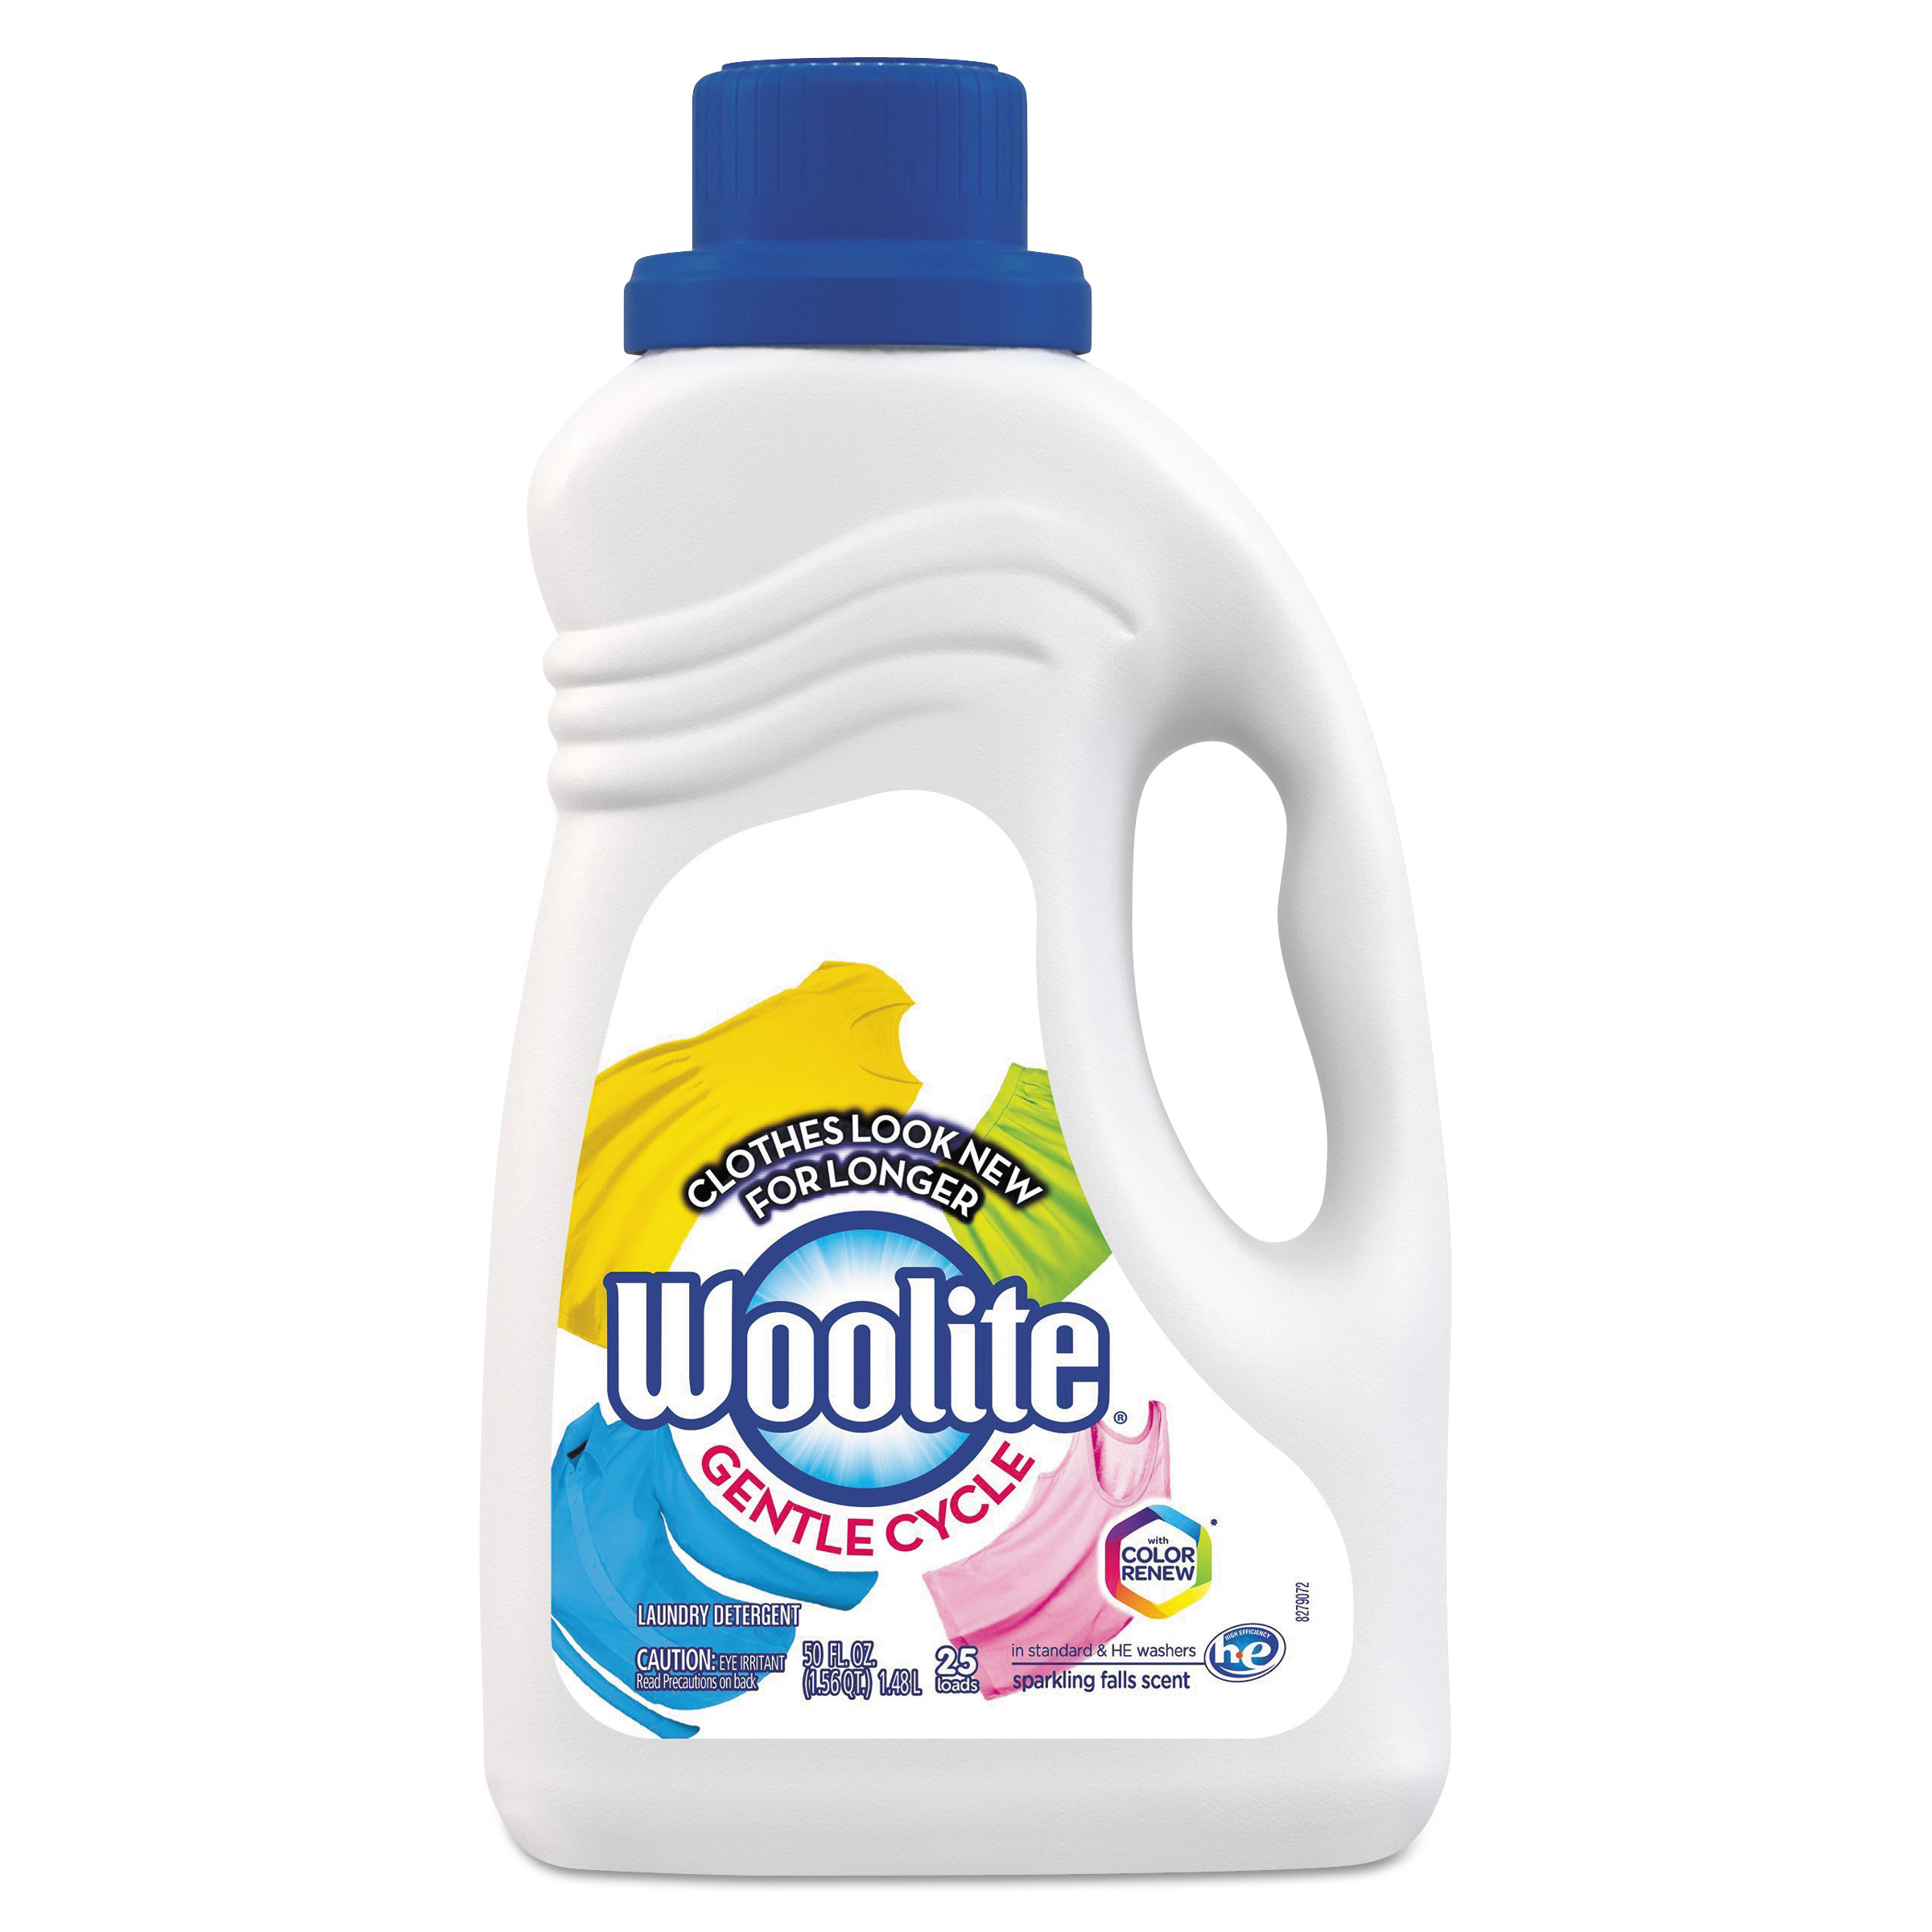  WOOLITE 62338-77940 Gentle Cycle Laundry Detergent, Light Floral, 50 oz Bottle (RAC77940) 